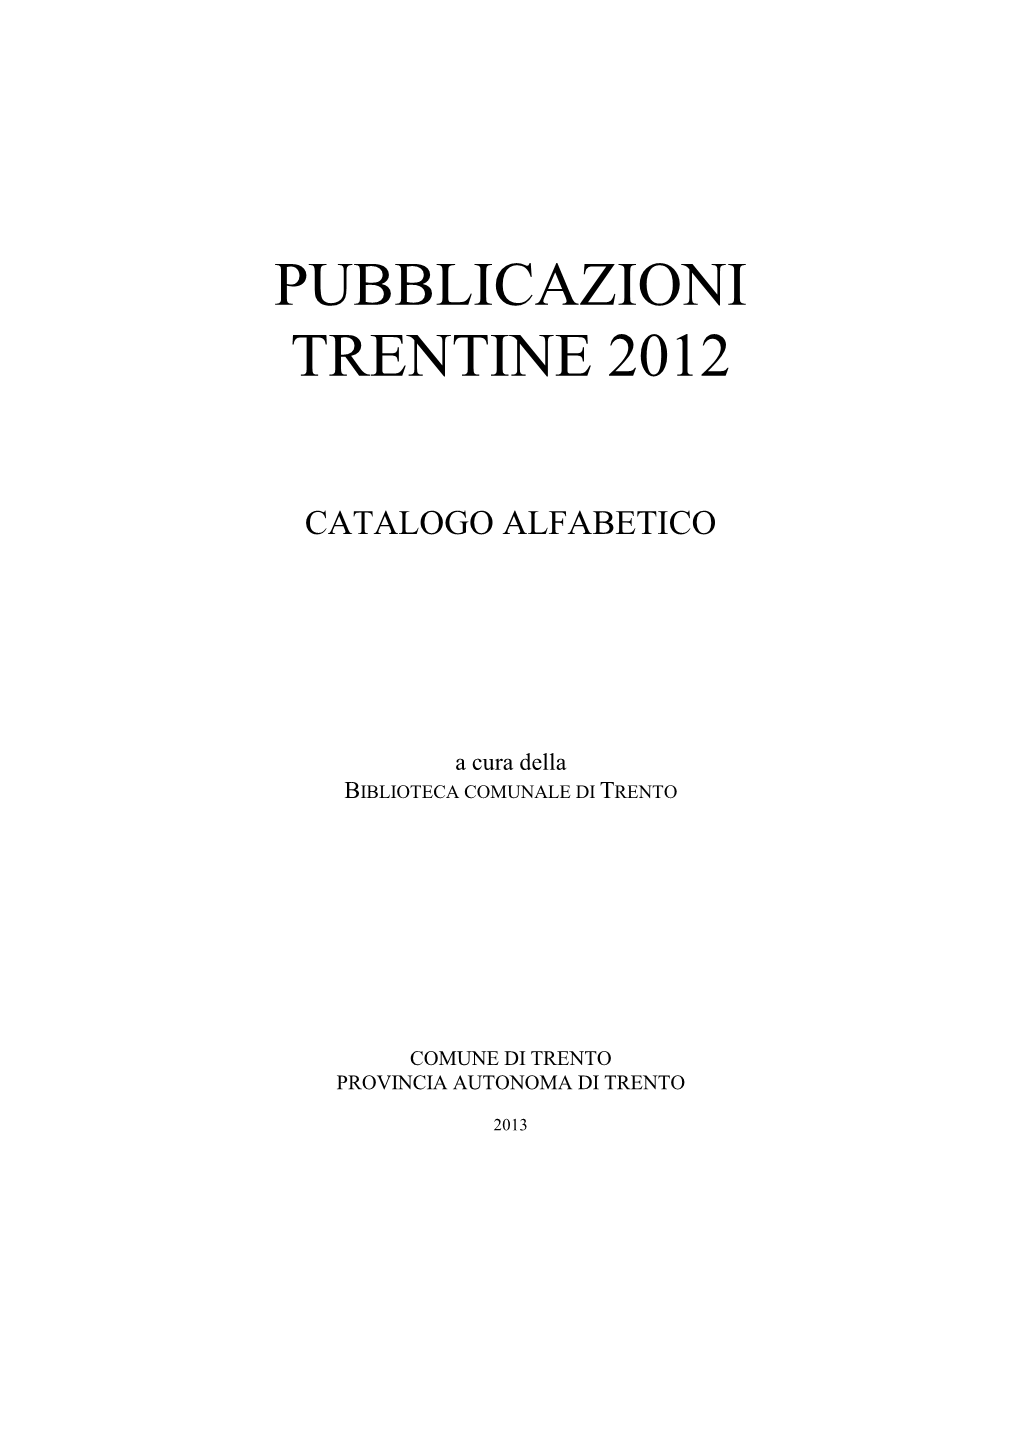 Pubblicazioni Trentine 2012